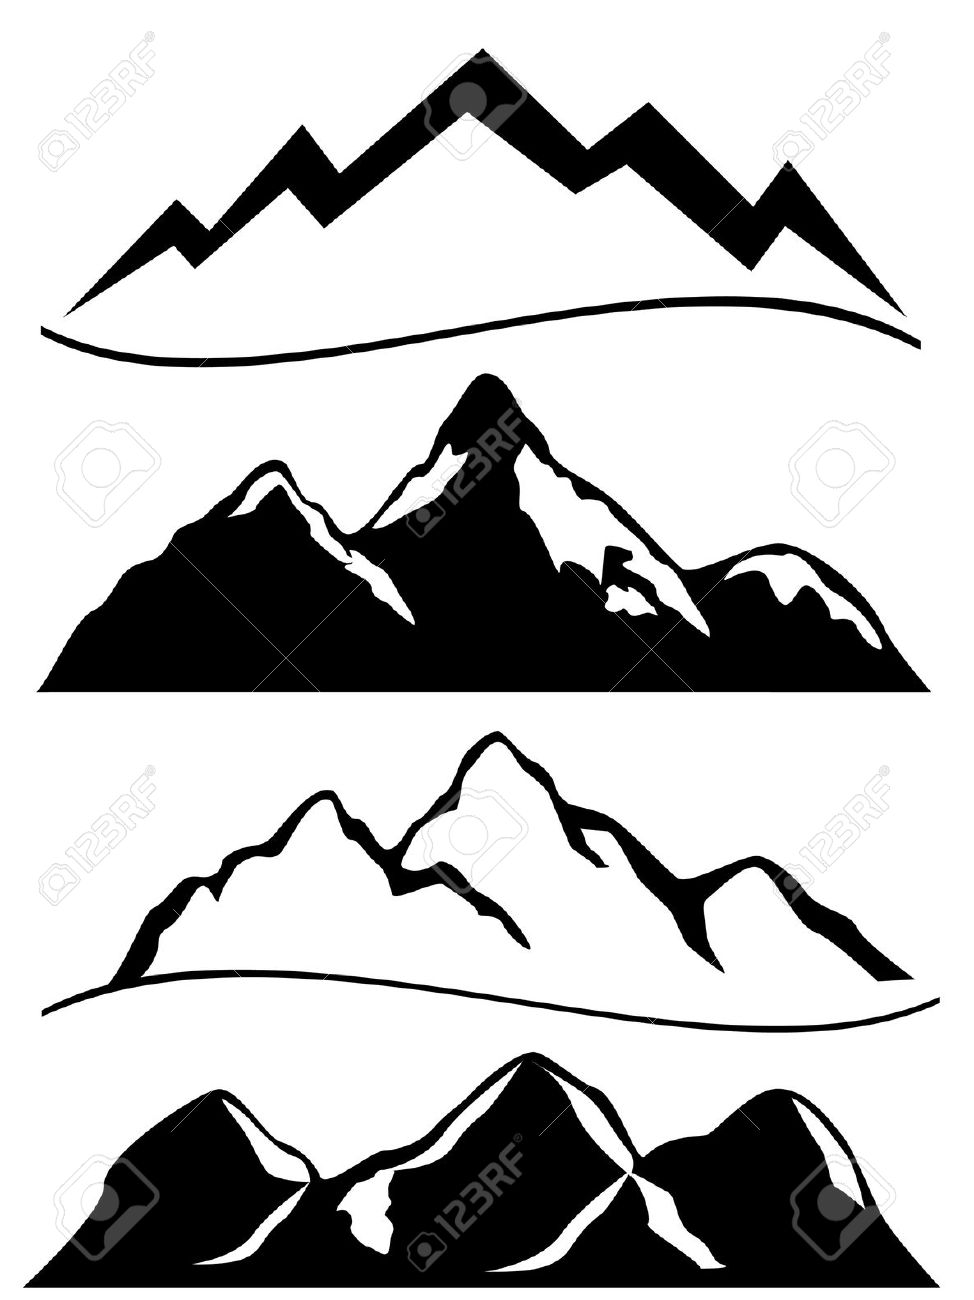 hills clipart mountain peak